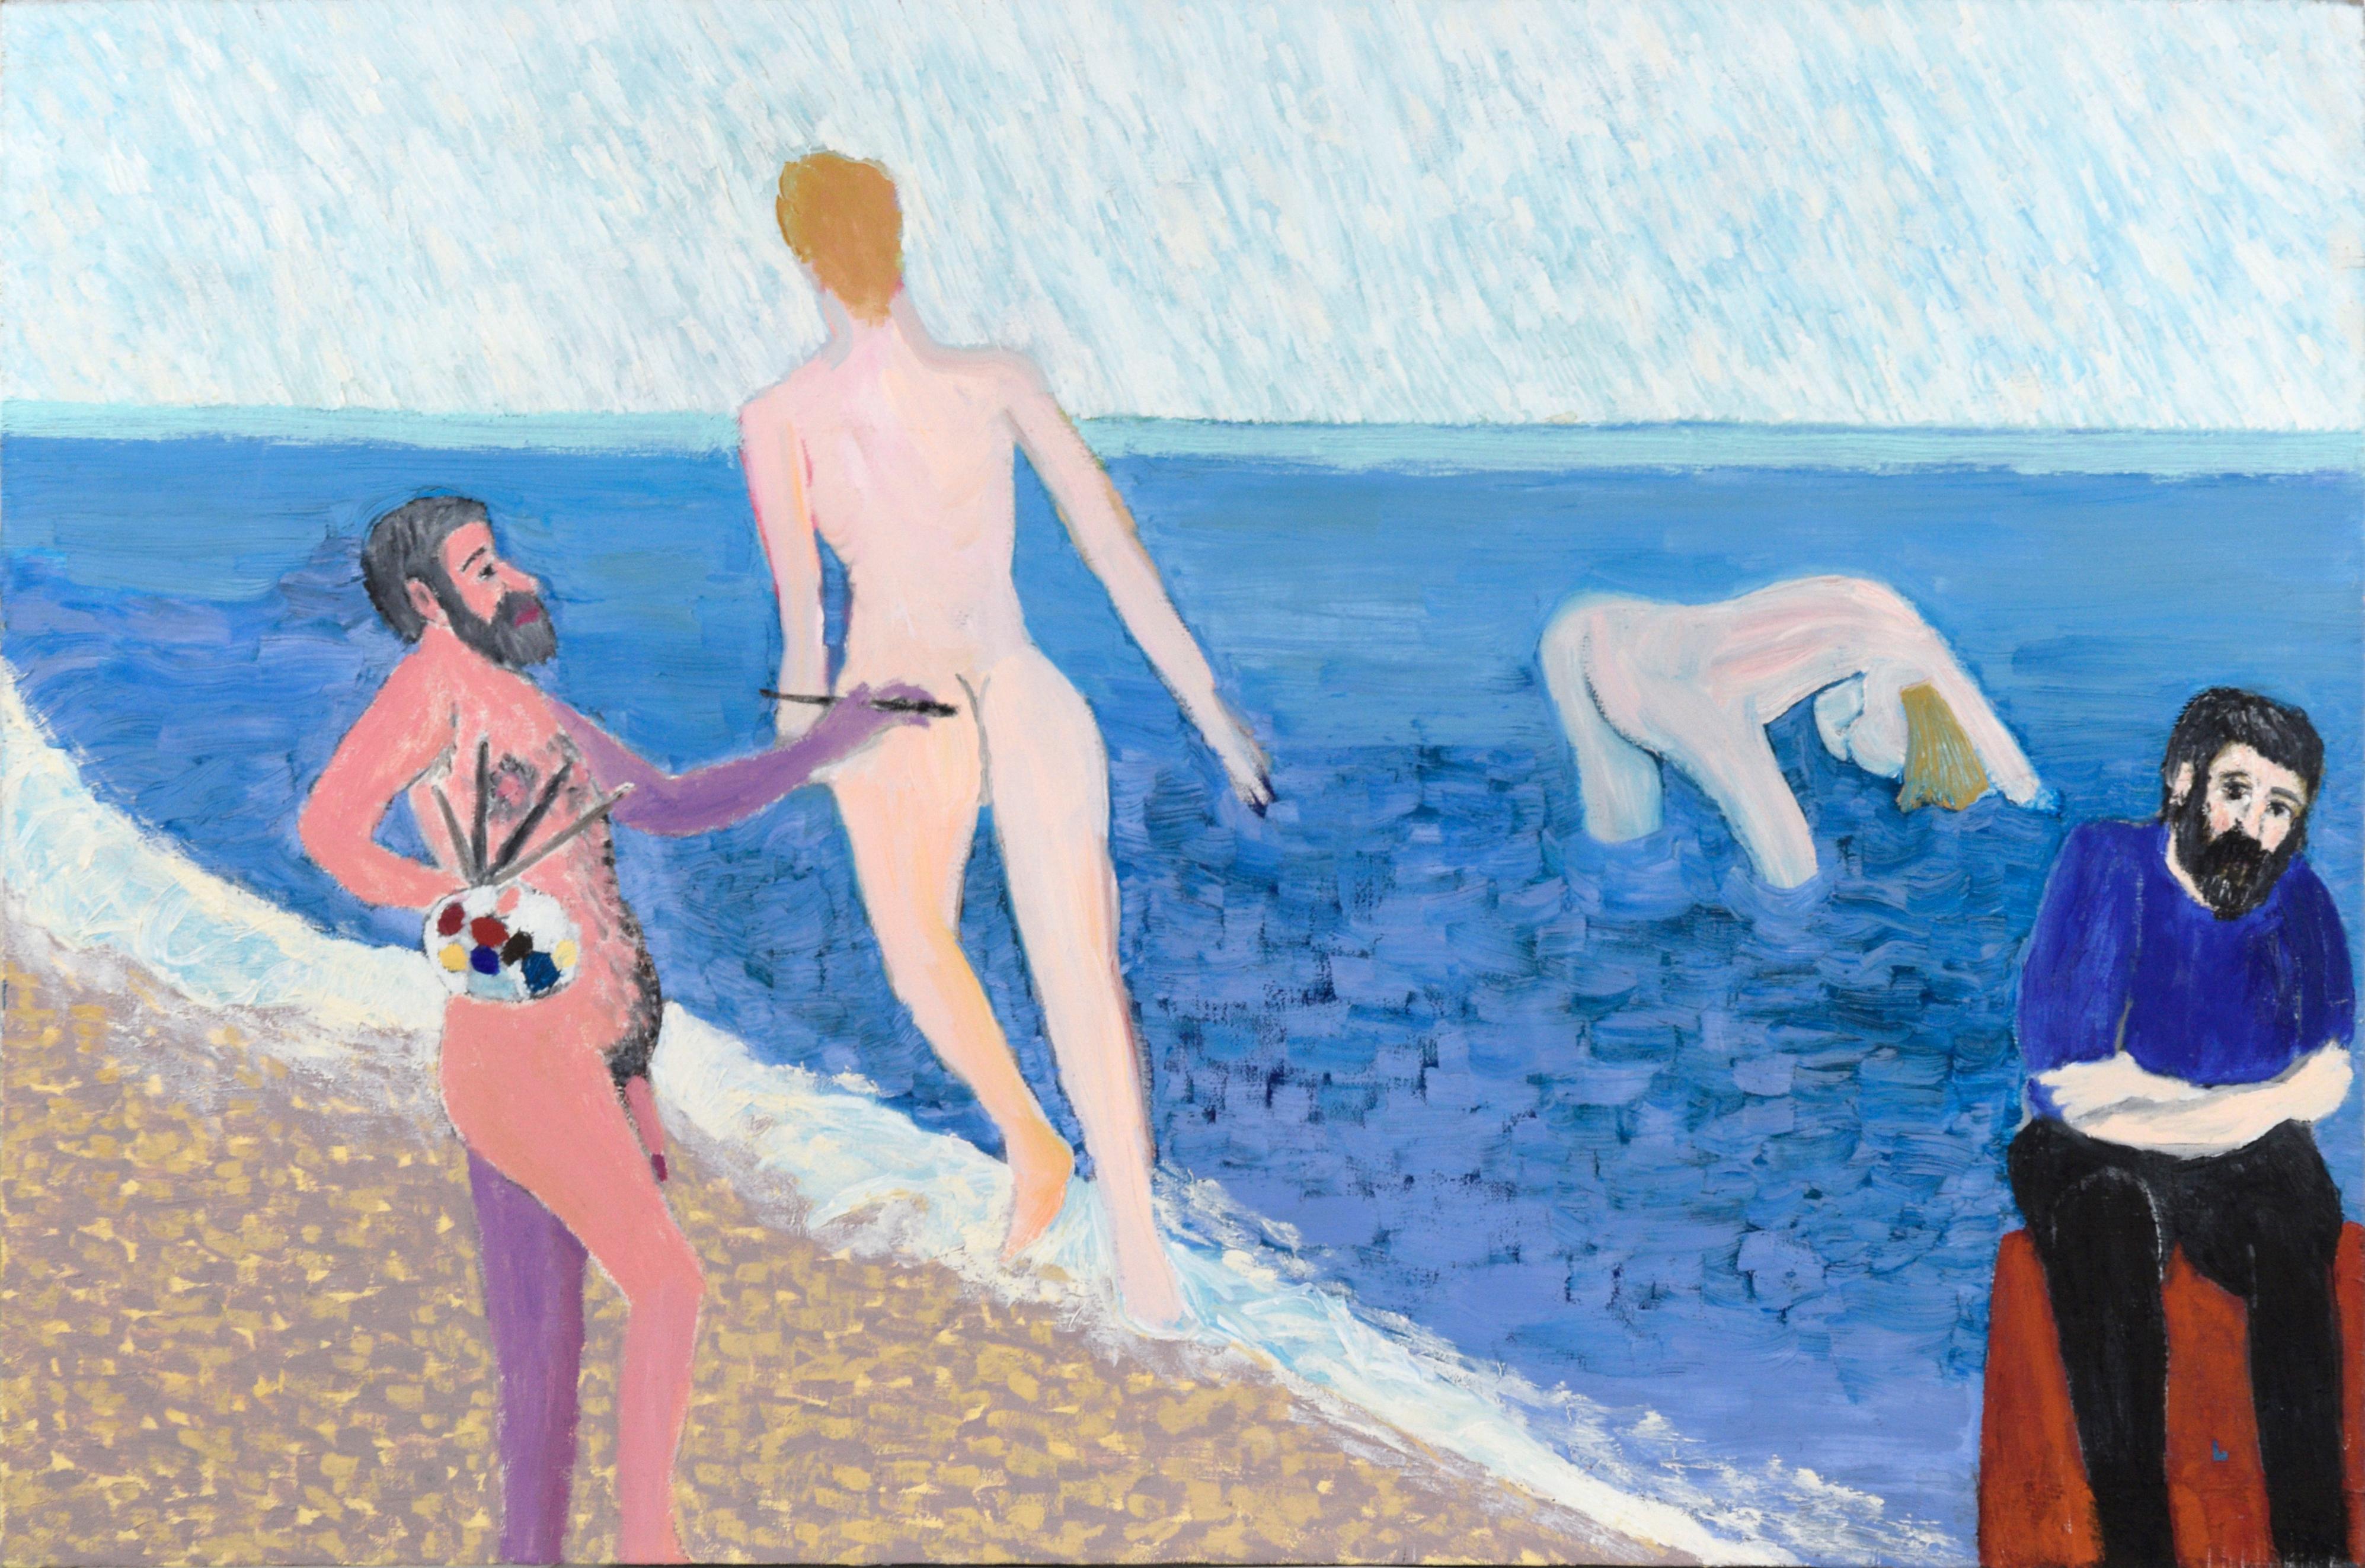 Michael Pauker  Landscape Painting - "Artist's Dream V" Nude Painting Nudes, Surreal Figurative with Self-Portrait